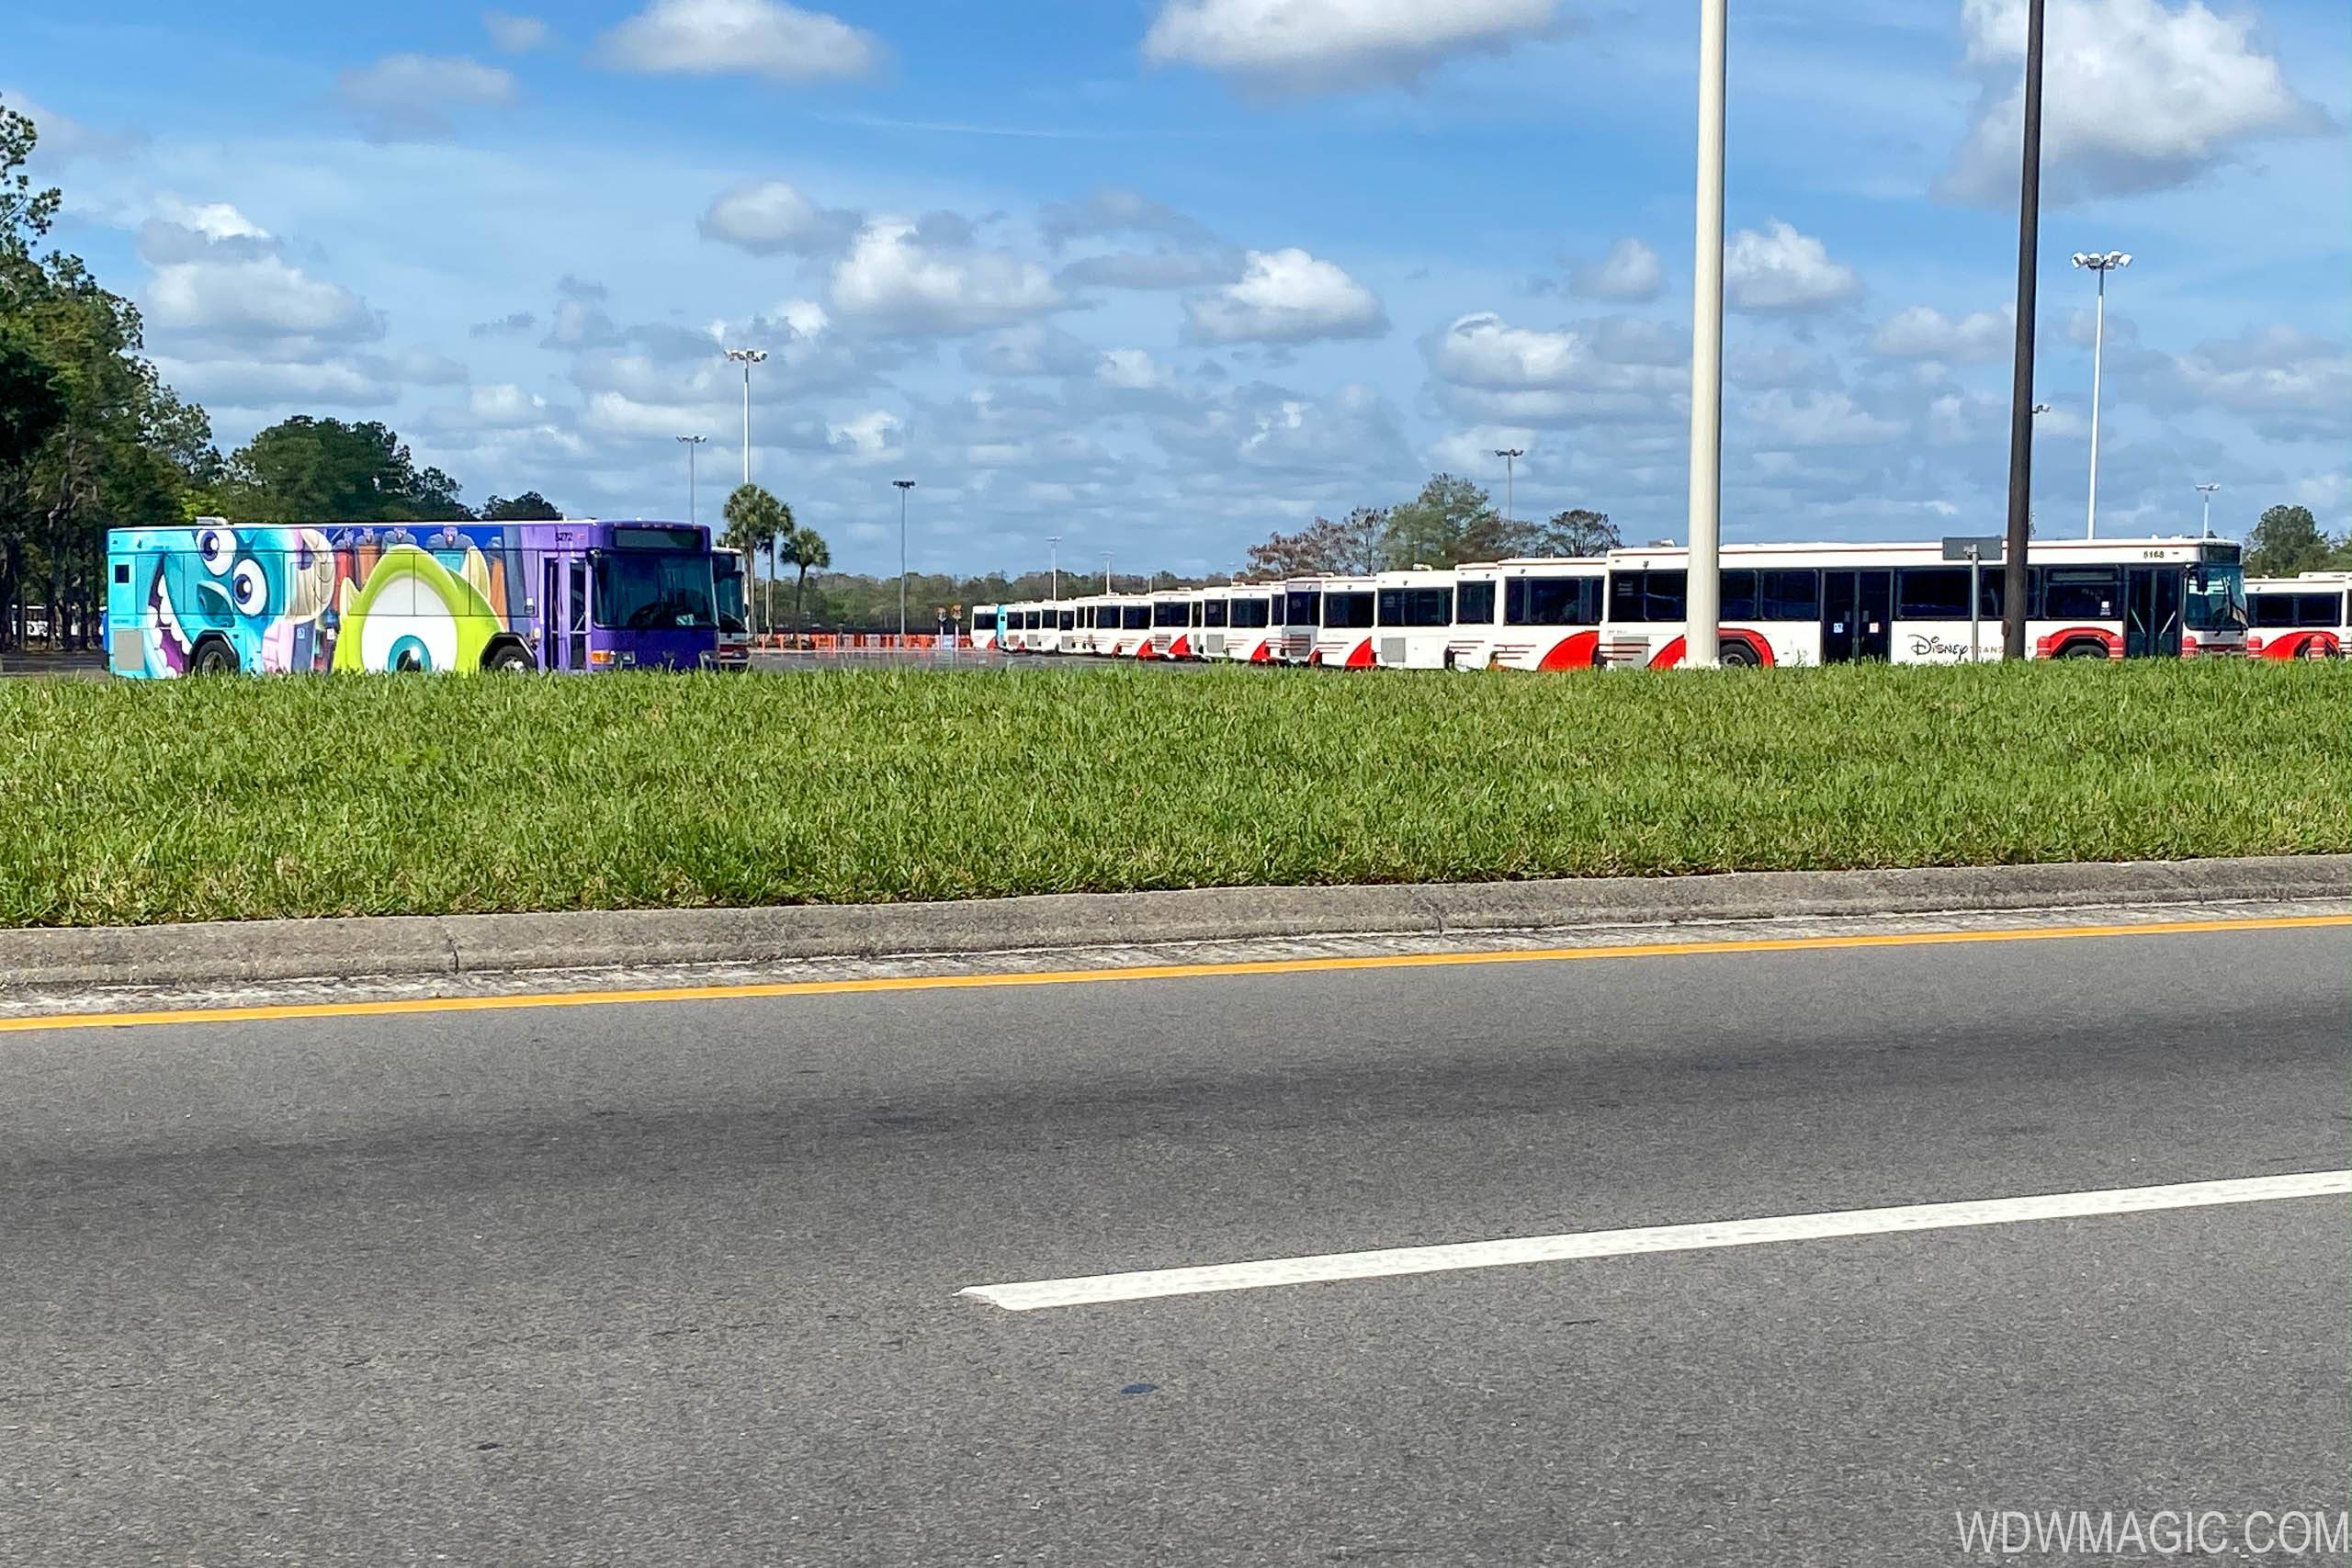 Walt Disney World Bus fleet parked during Coronavirus closure